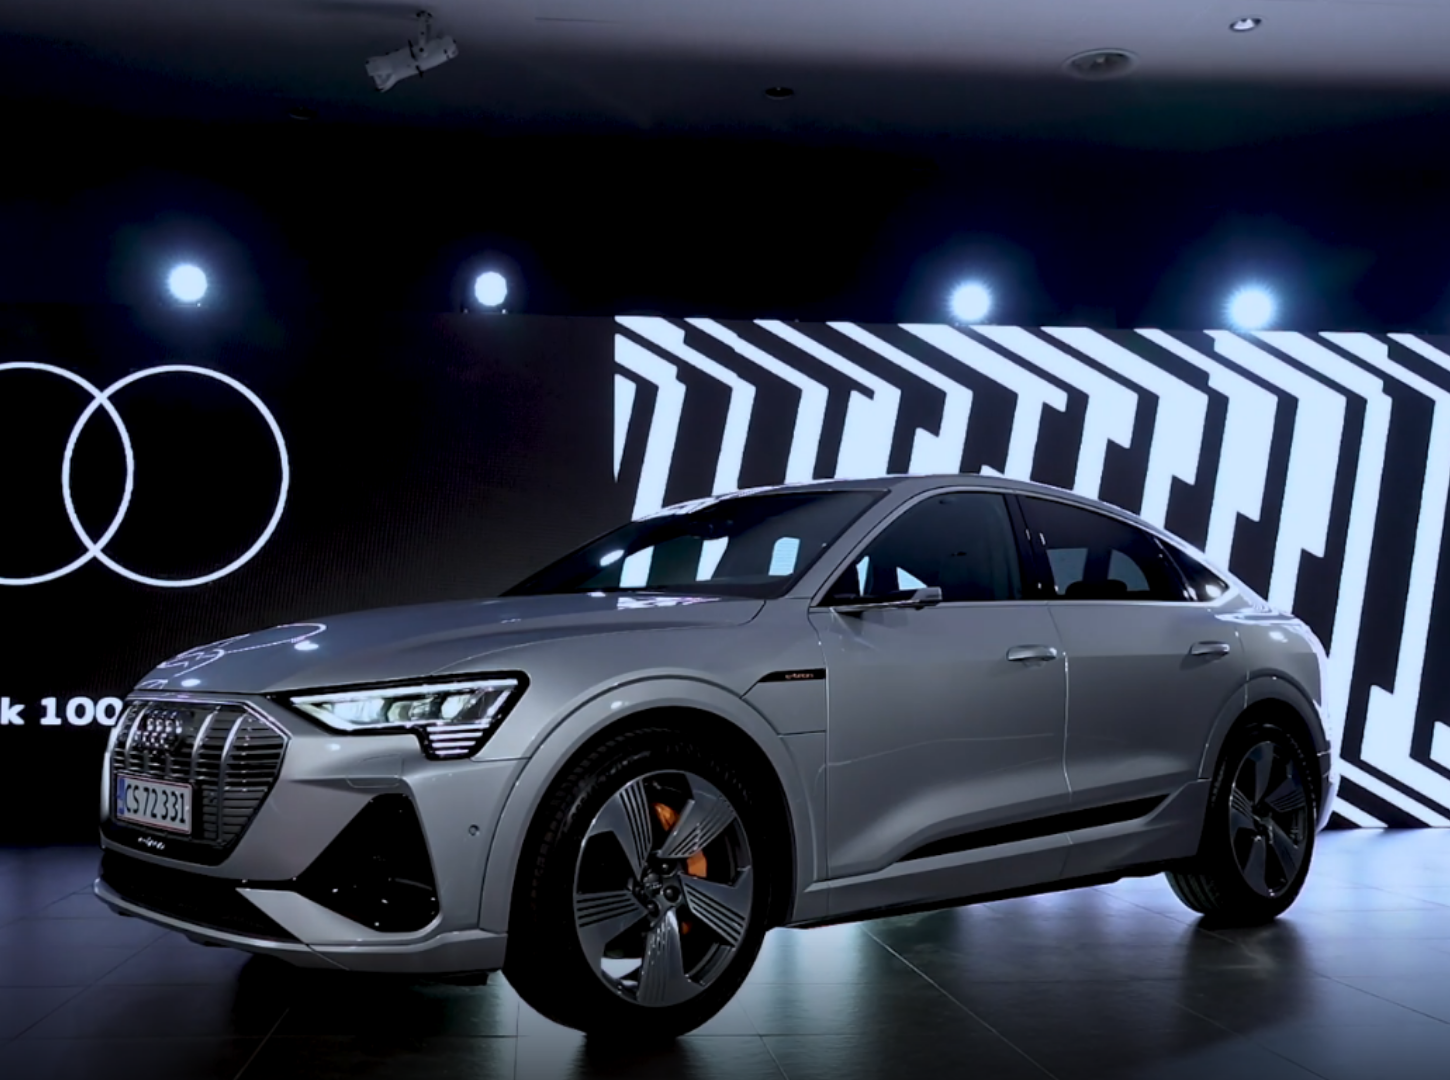 Audi Danmark – products launch